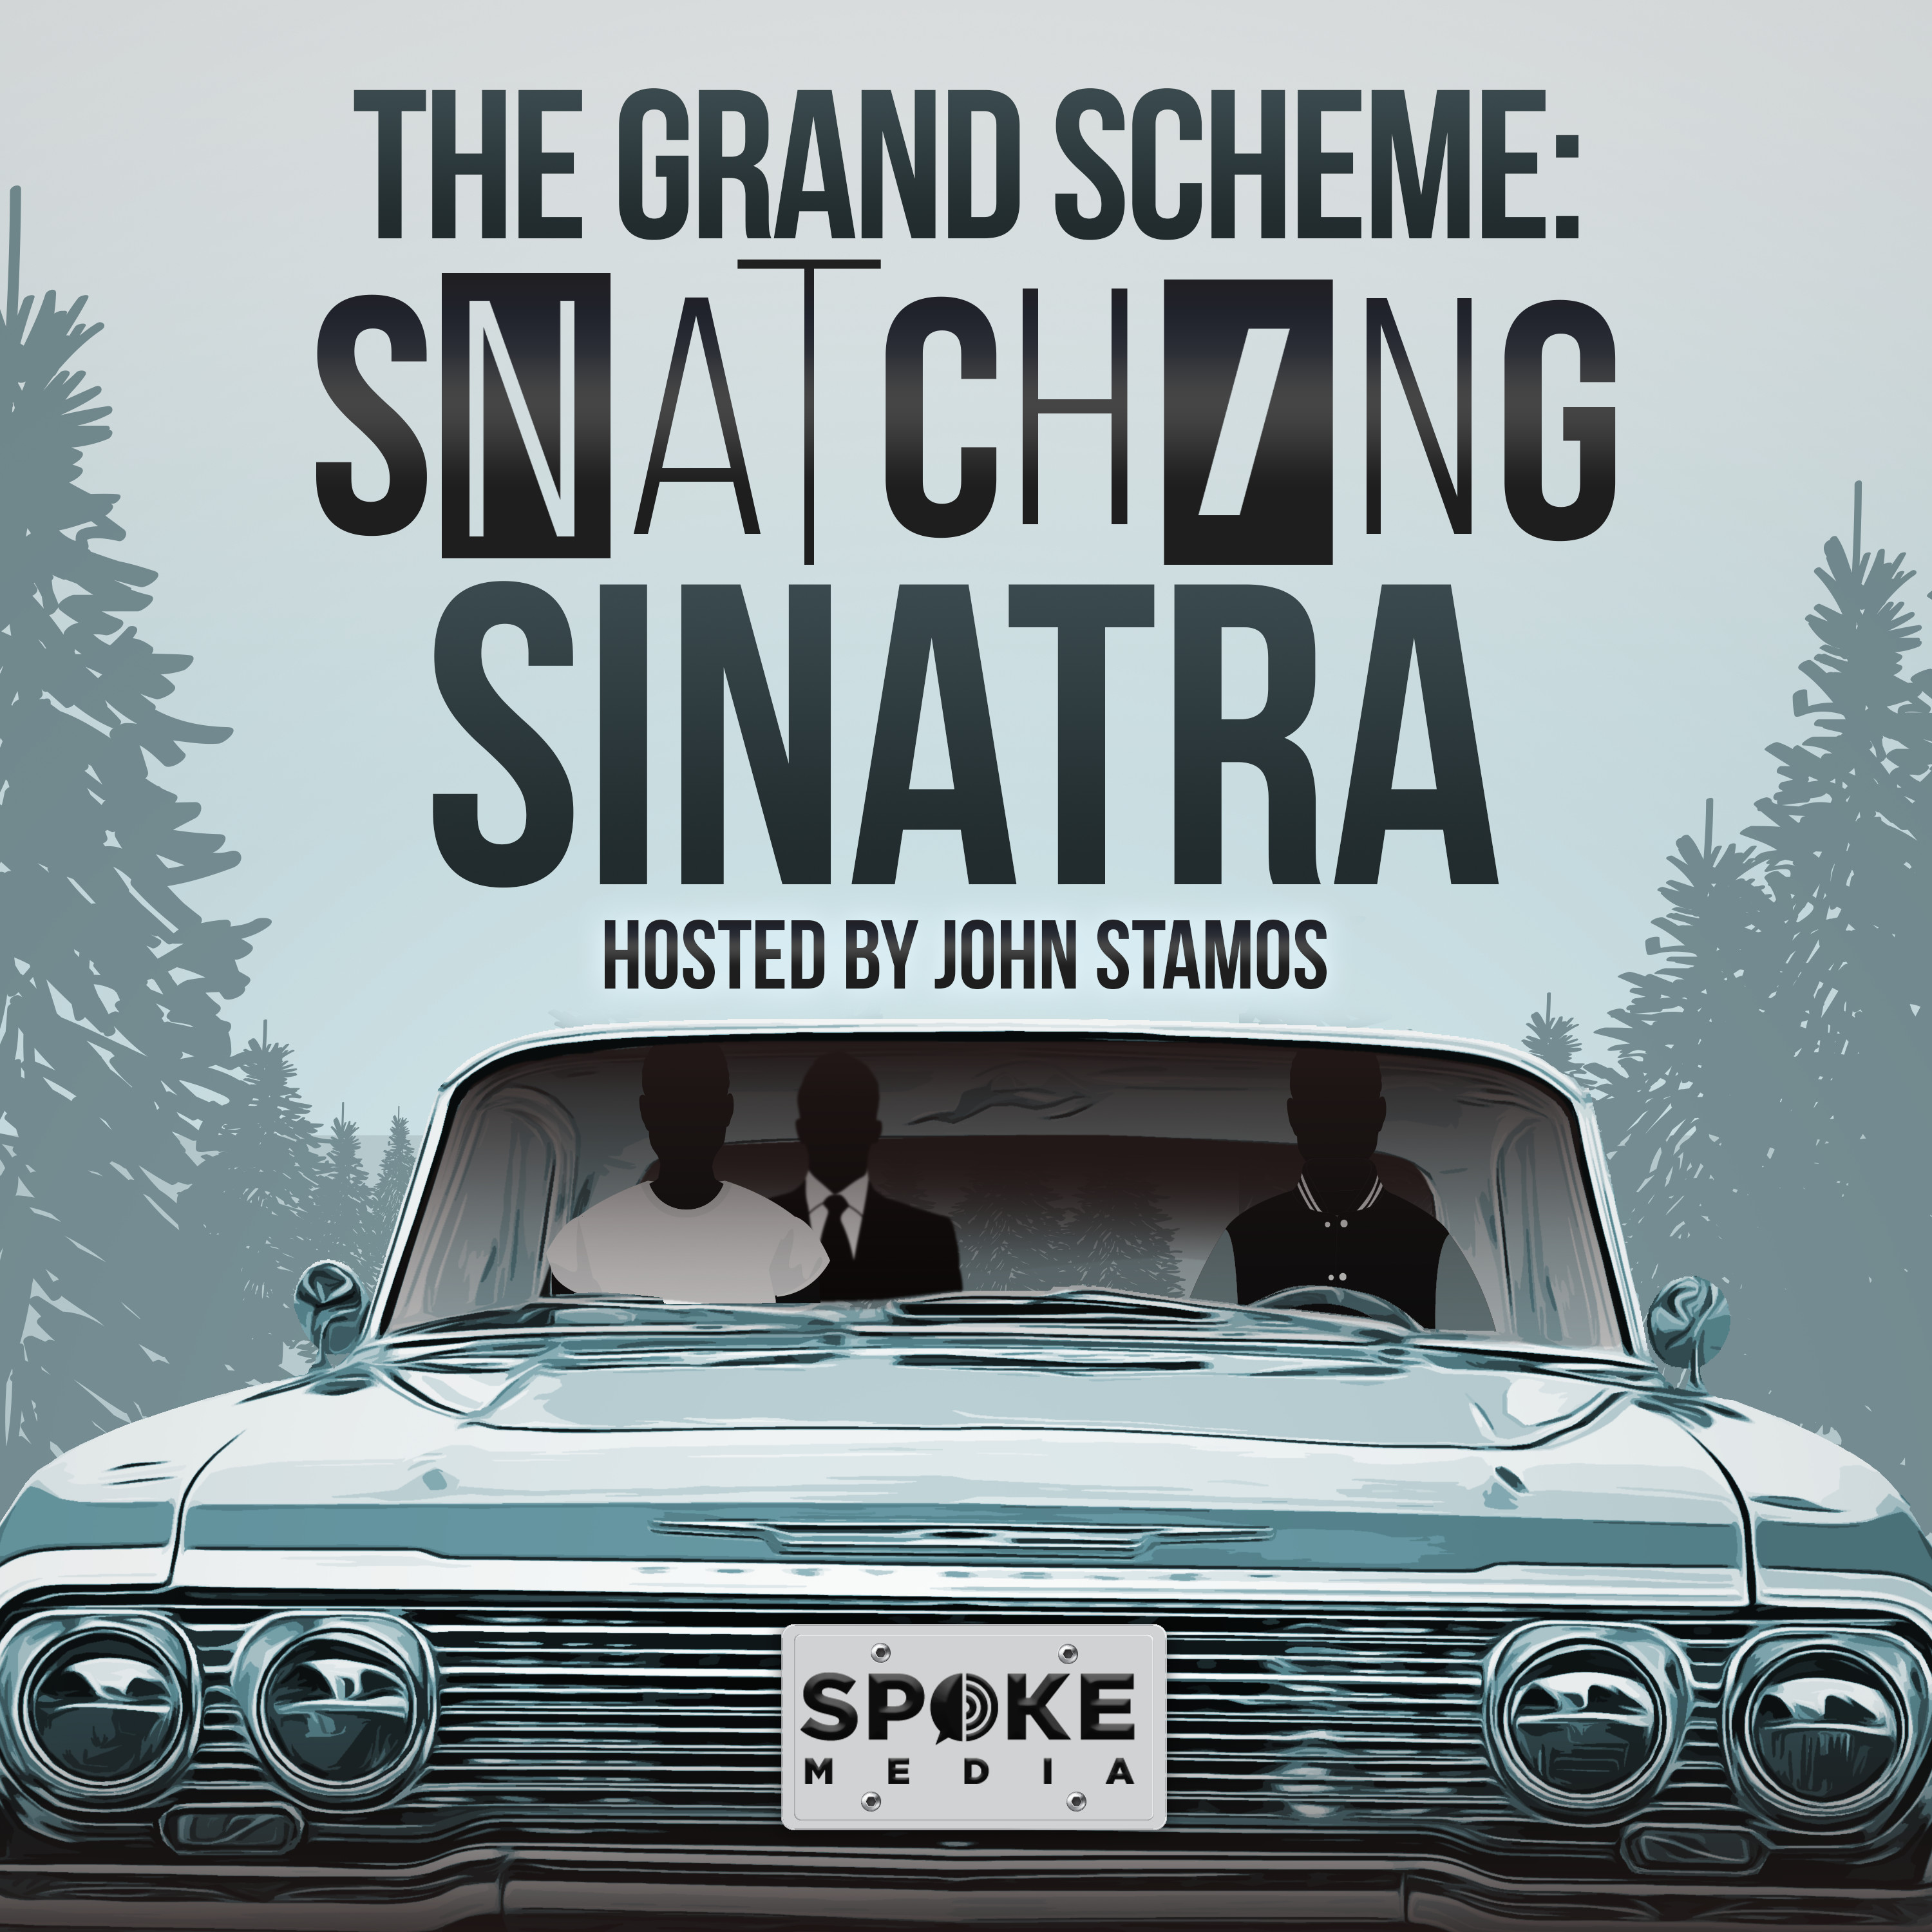 The Grand Scheme podcast show image